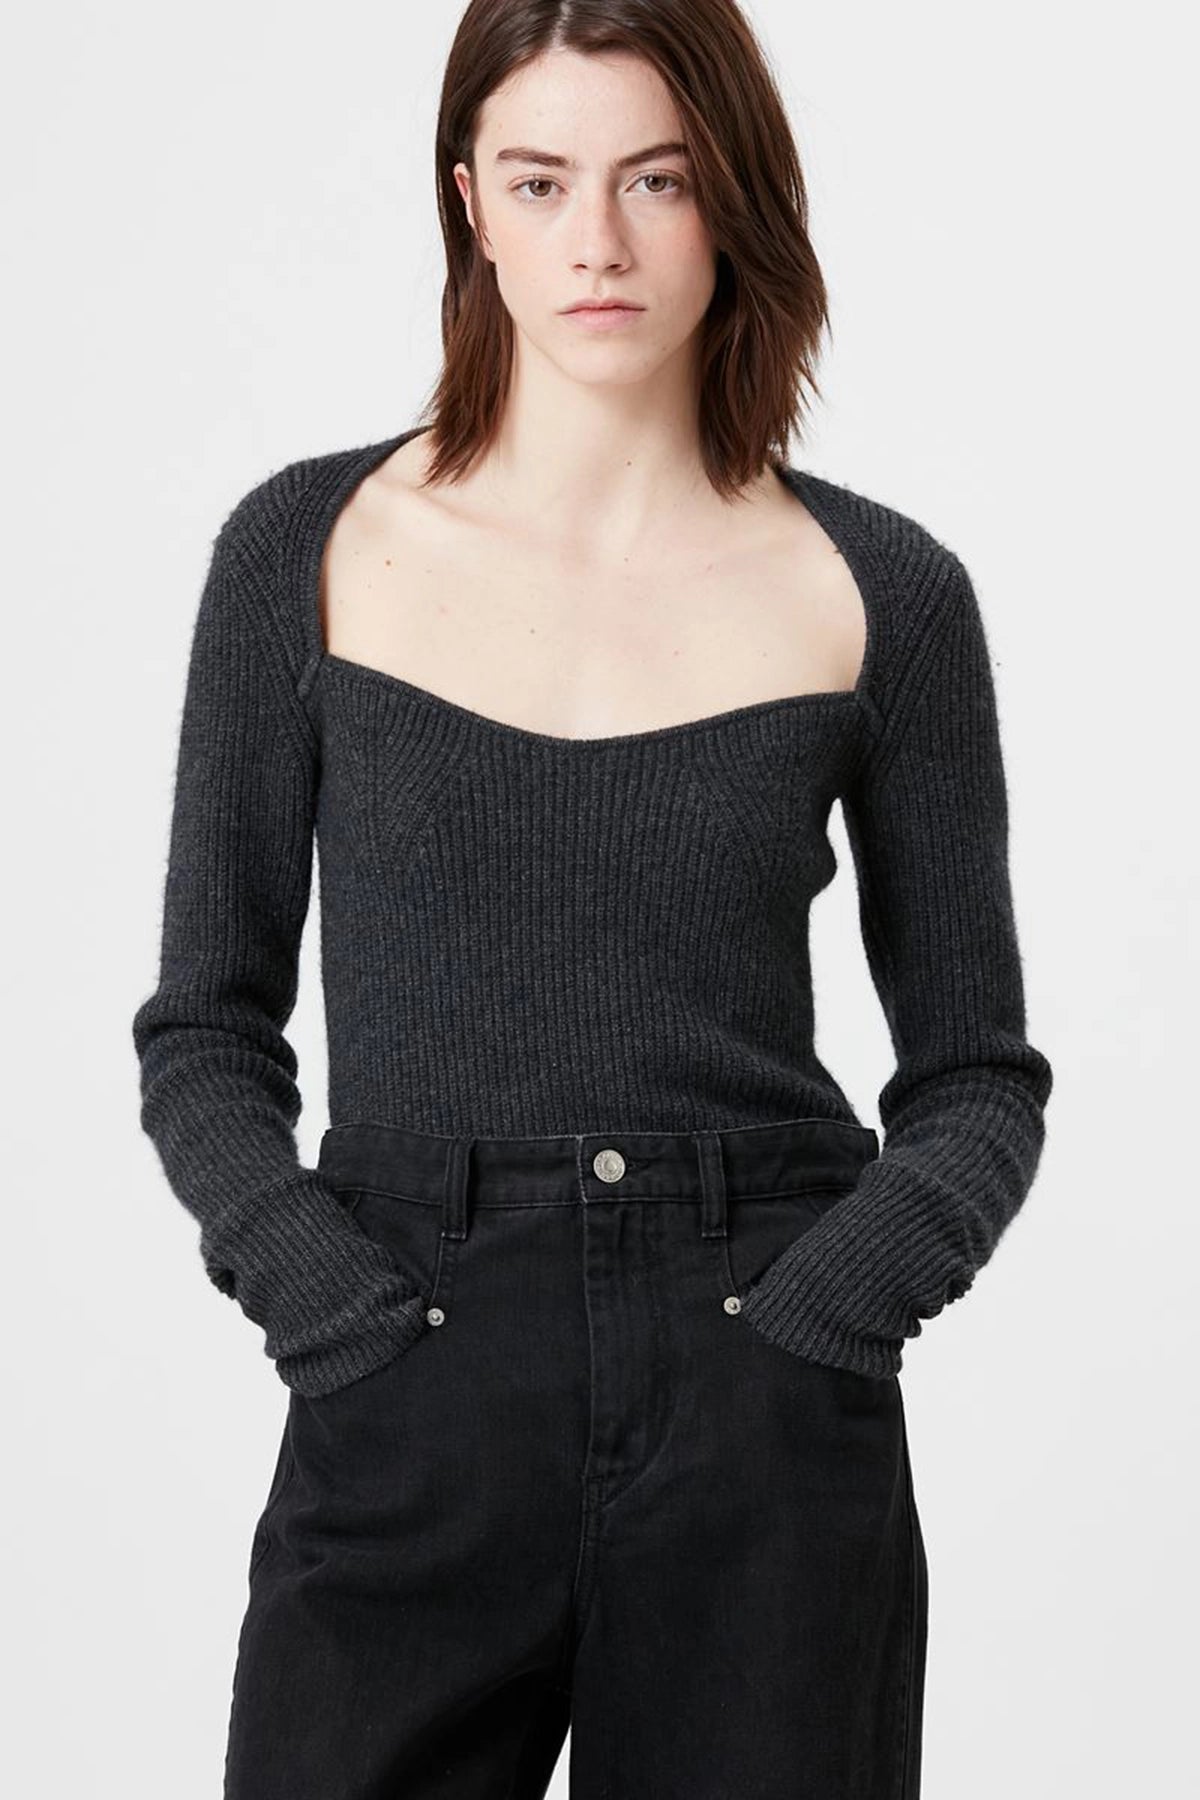 Isabel Marant Bailey Sweater